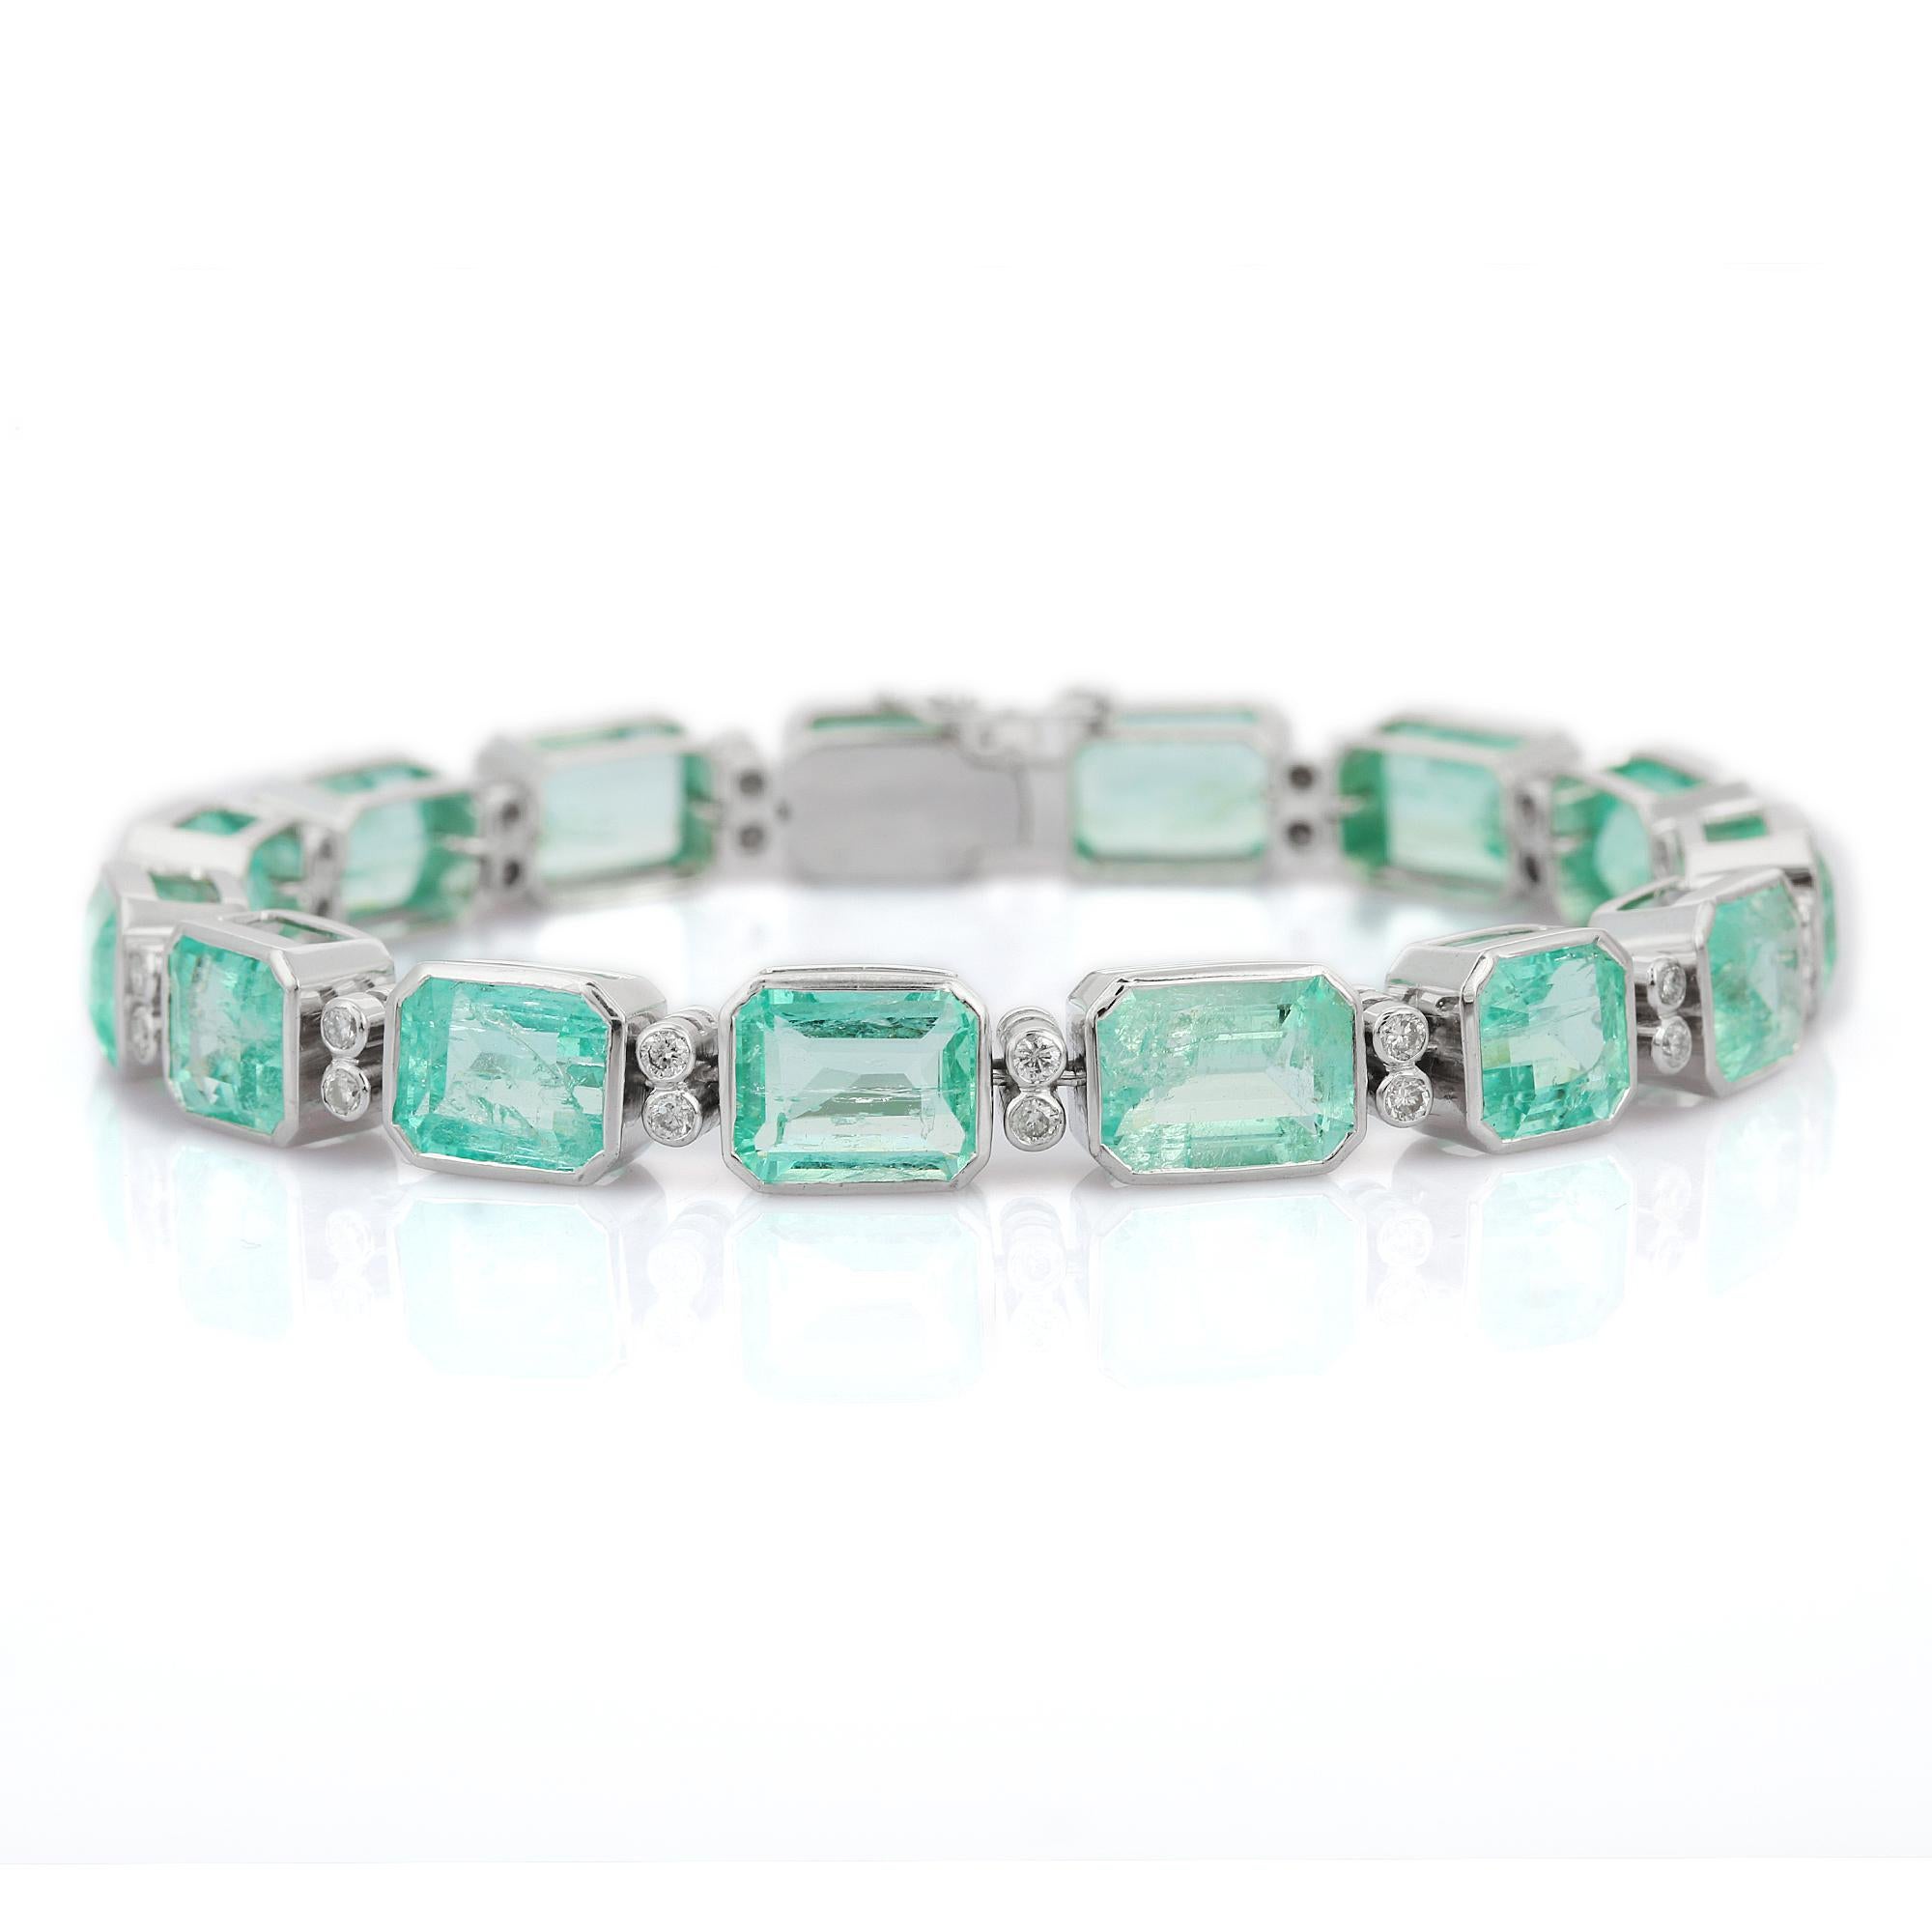 33.58 Carat Octagon Cut Emerald Tennis Bracelet with Diamonds in 18K White Gold